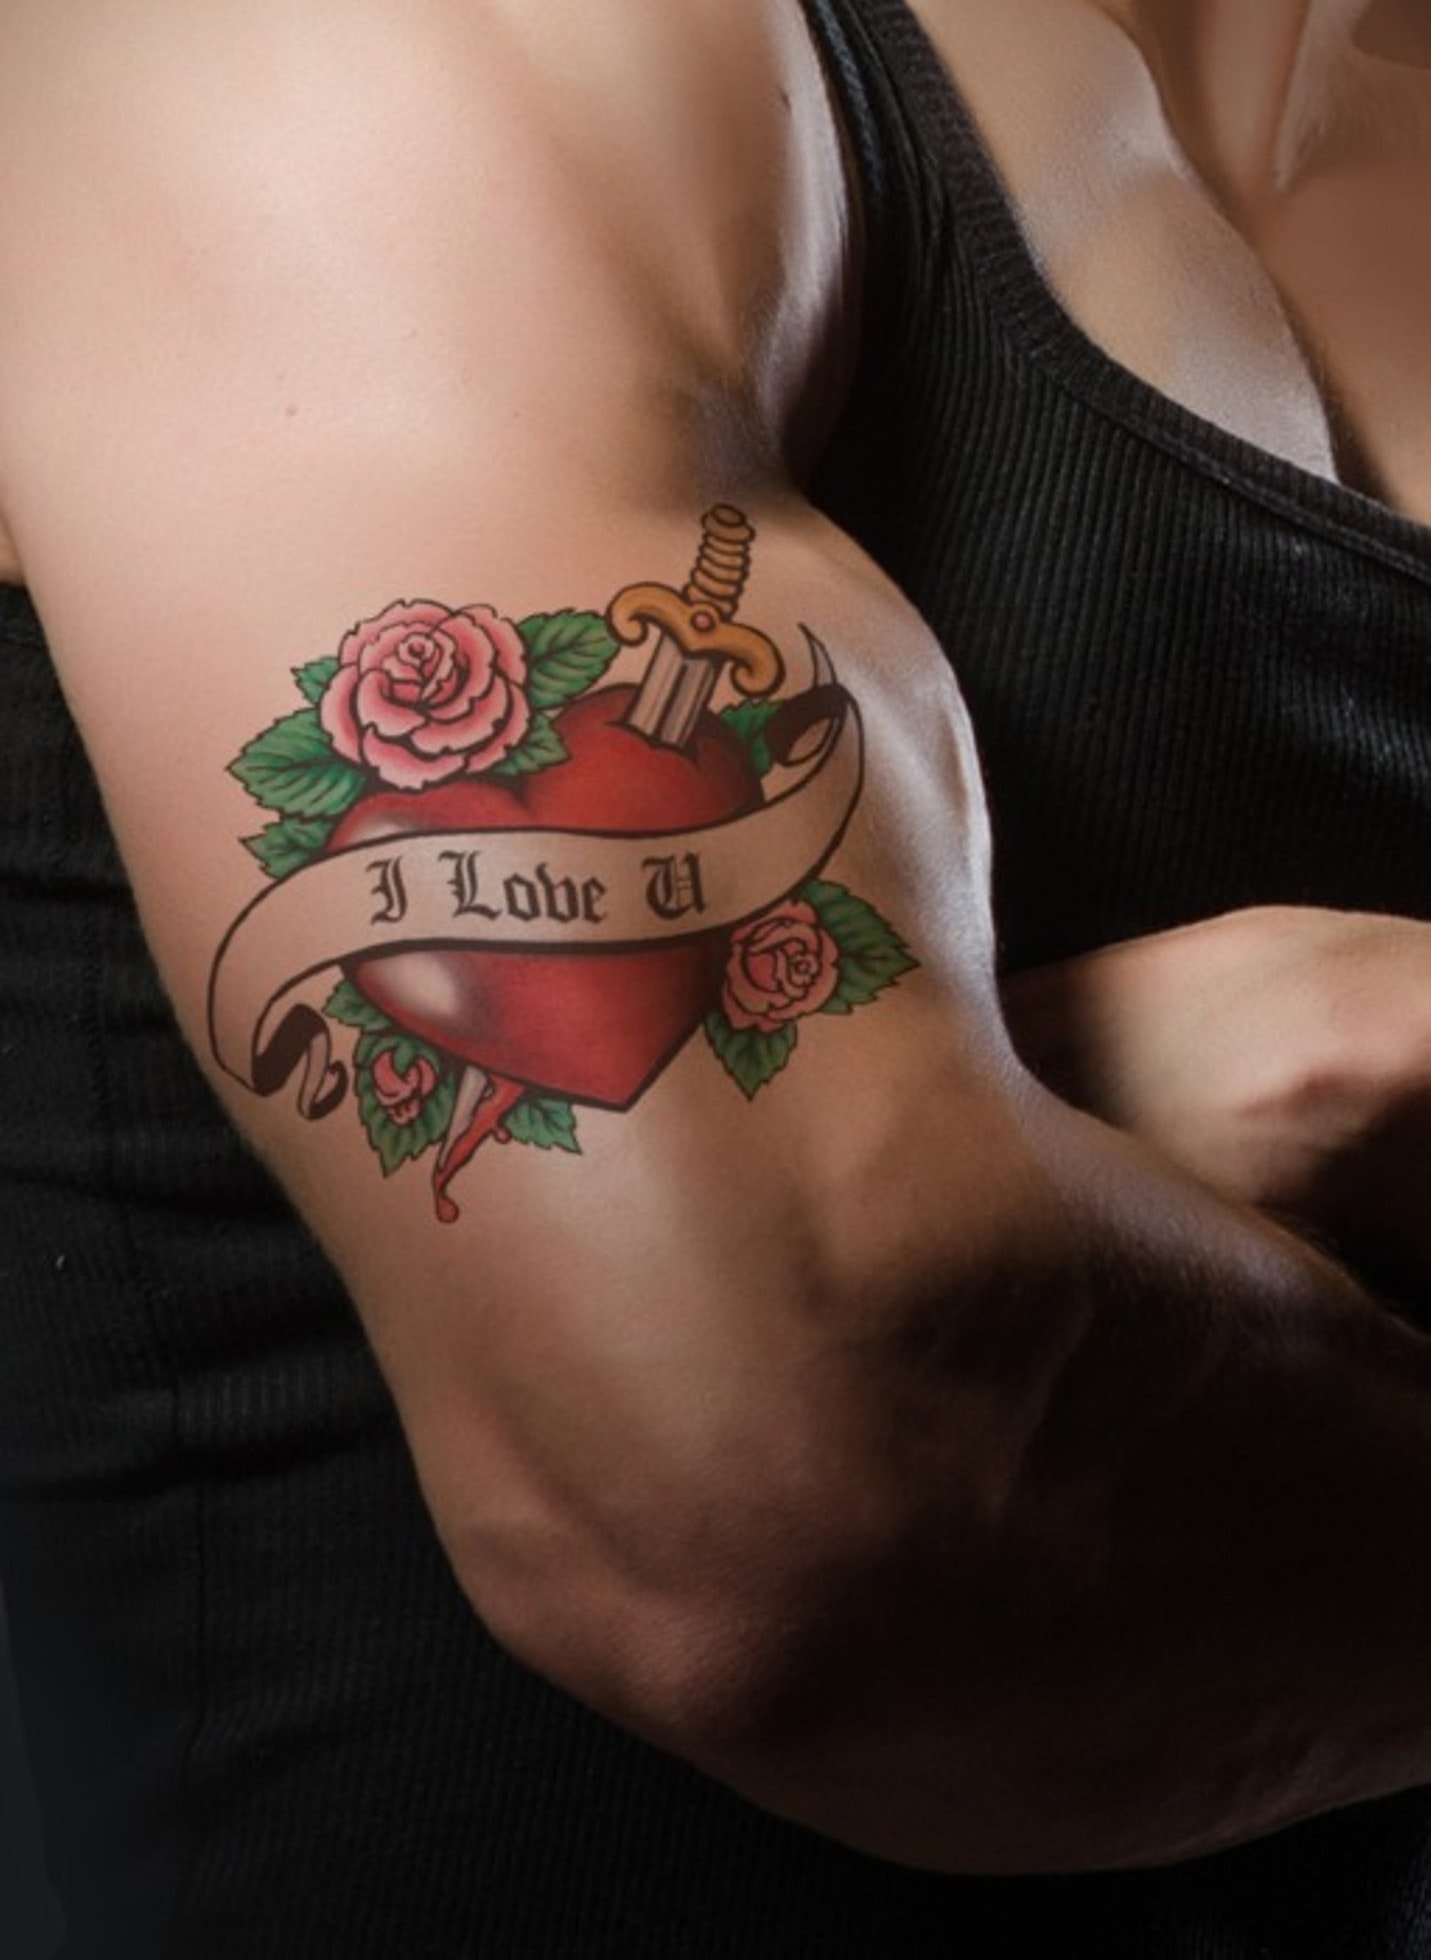 TAFLY Temporary Tattoos Chest Rose Waterproof Fake Body Art Tattoos Sticker  for Women 5 Sheets  Amazonae Beauty